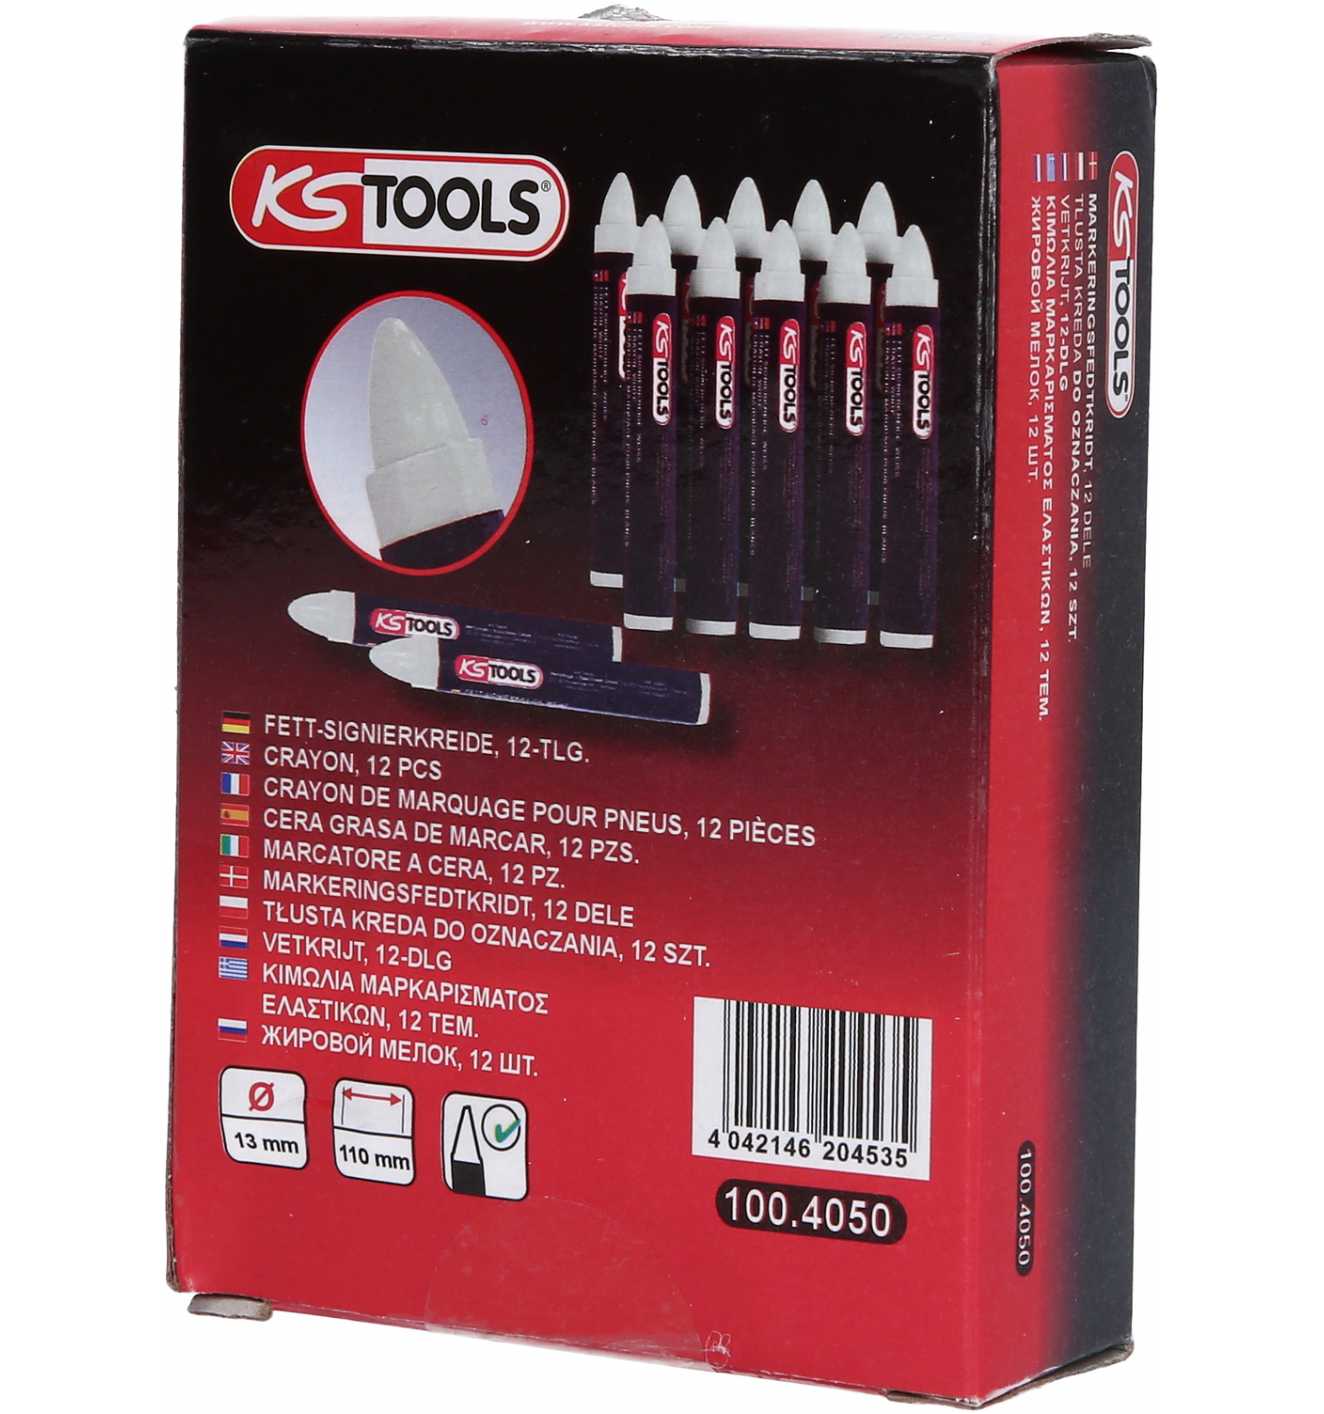 KS Tools Signierkreide, weiß, 12er Pack - 7